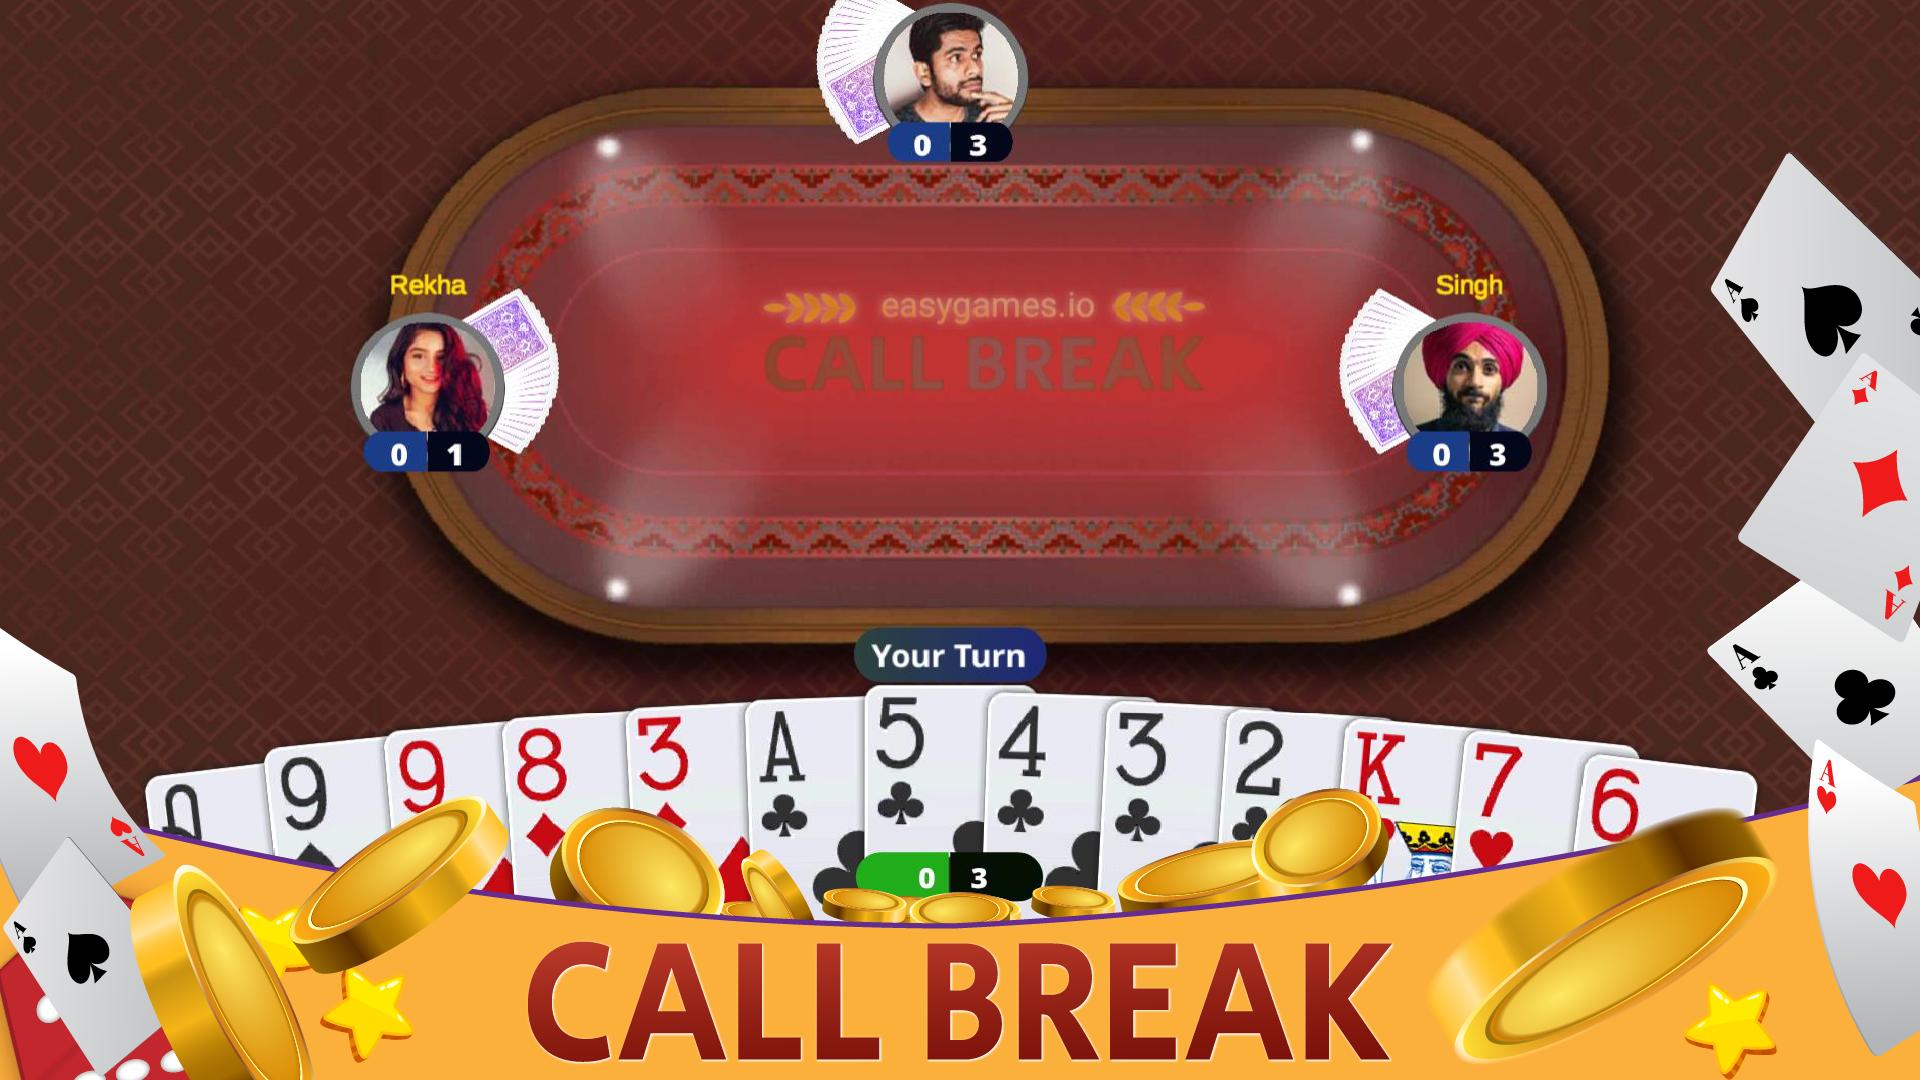 Callbreak, Ludo, Rummy & 9 Card Game -Easygames.io 20210120 Screenshot 2